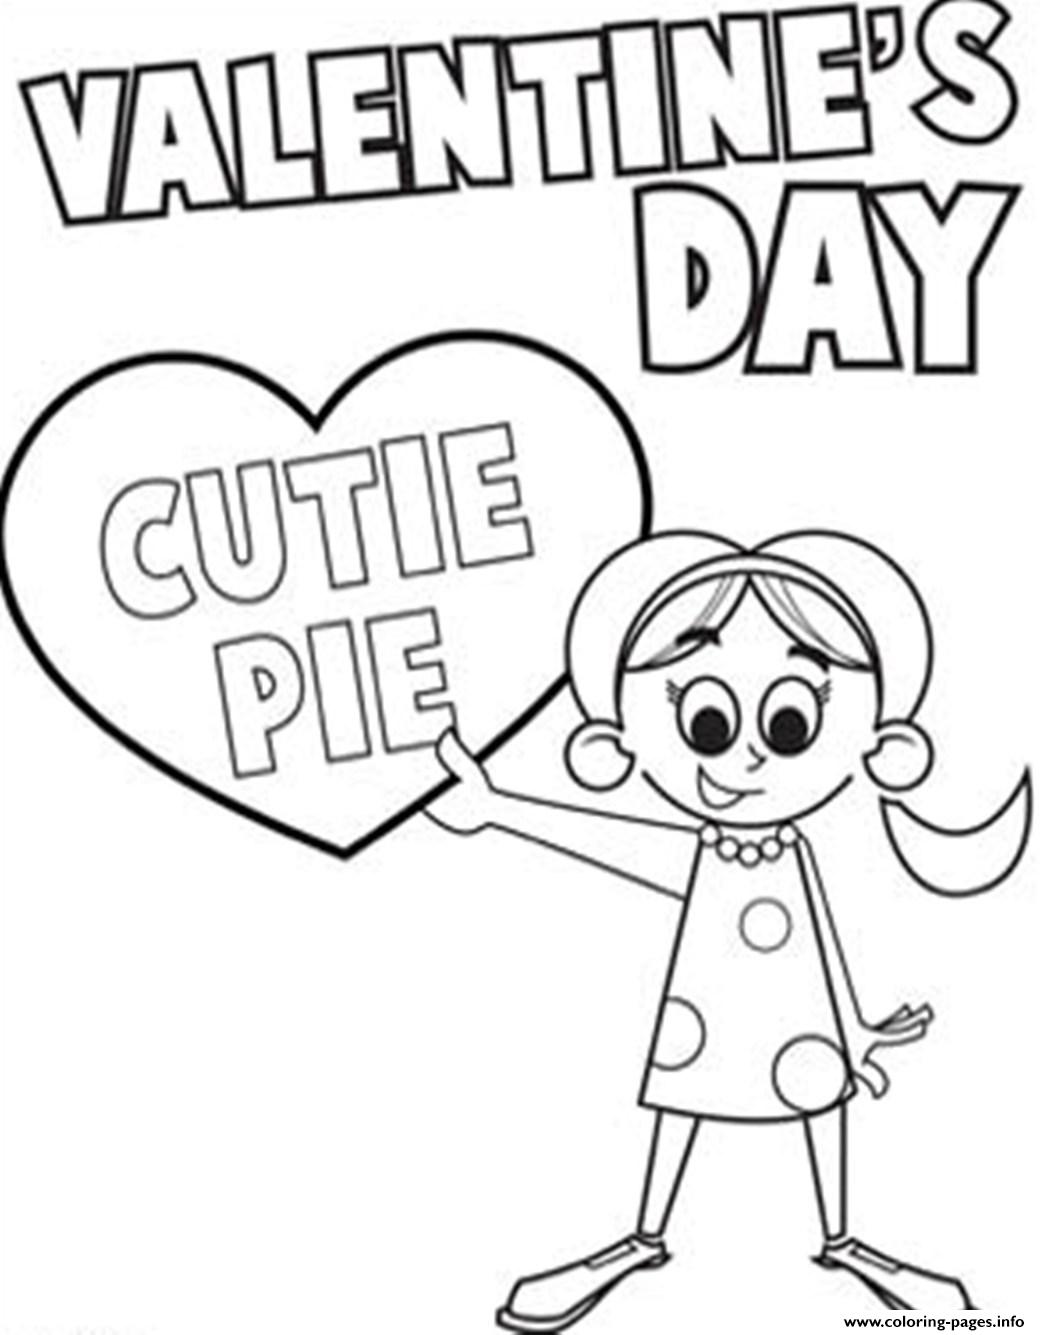 Cutie Pie Valentine 65ff coloring